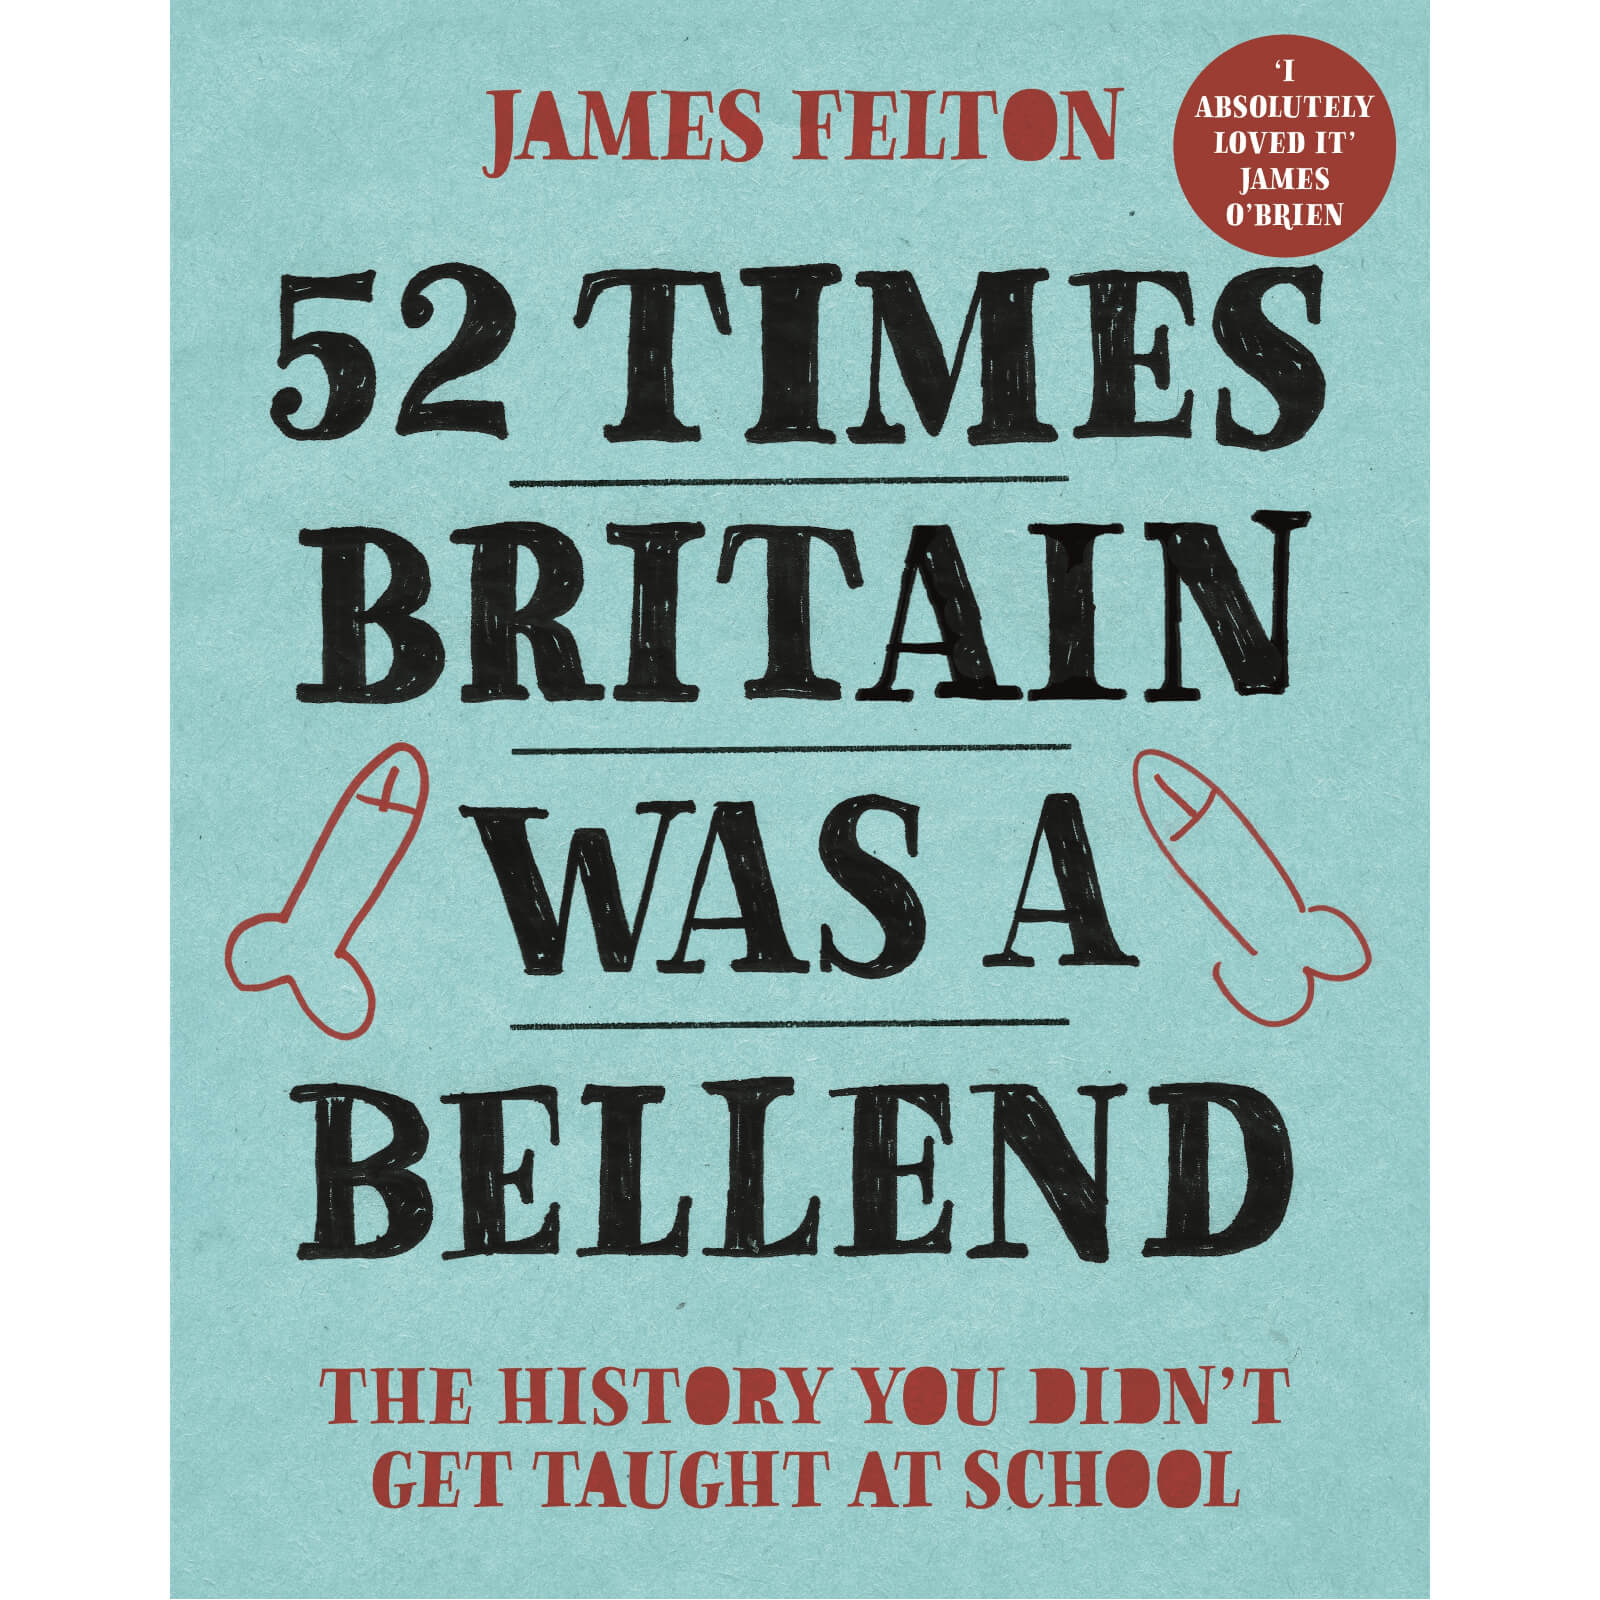 52 Times Britain was a Bellend Book